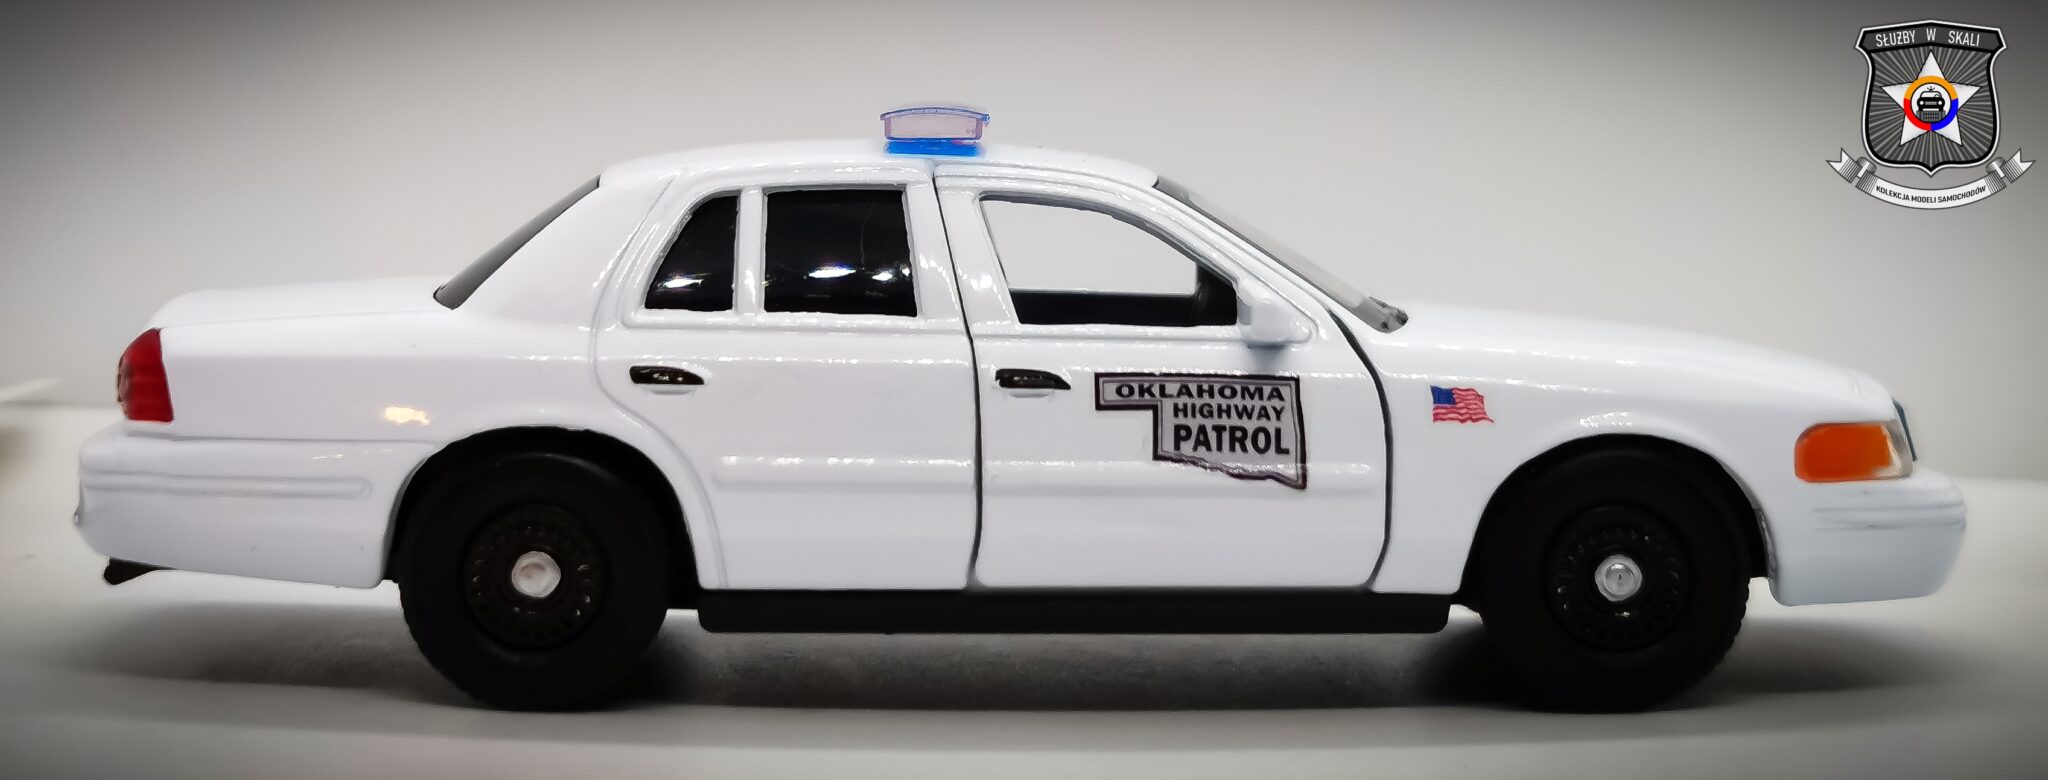 Ford Crown Victoria Oklahoma Highway Patrol (USA